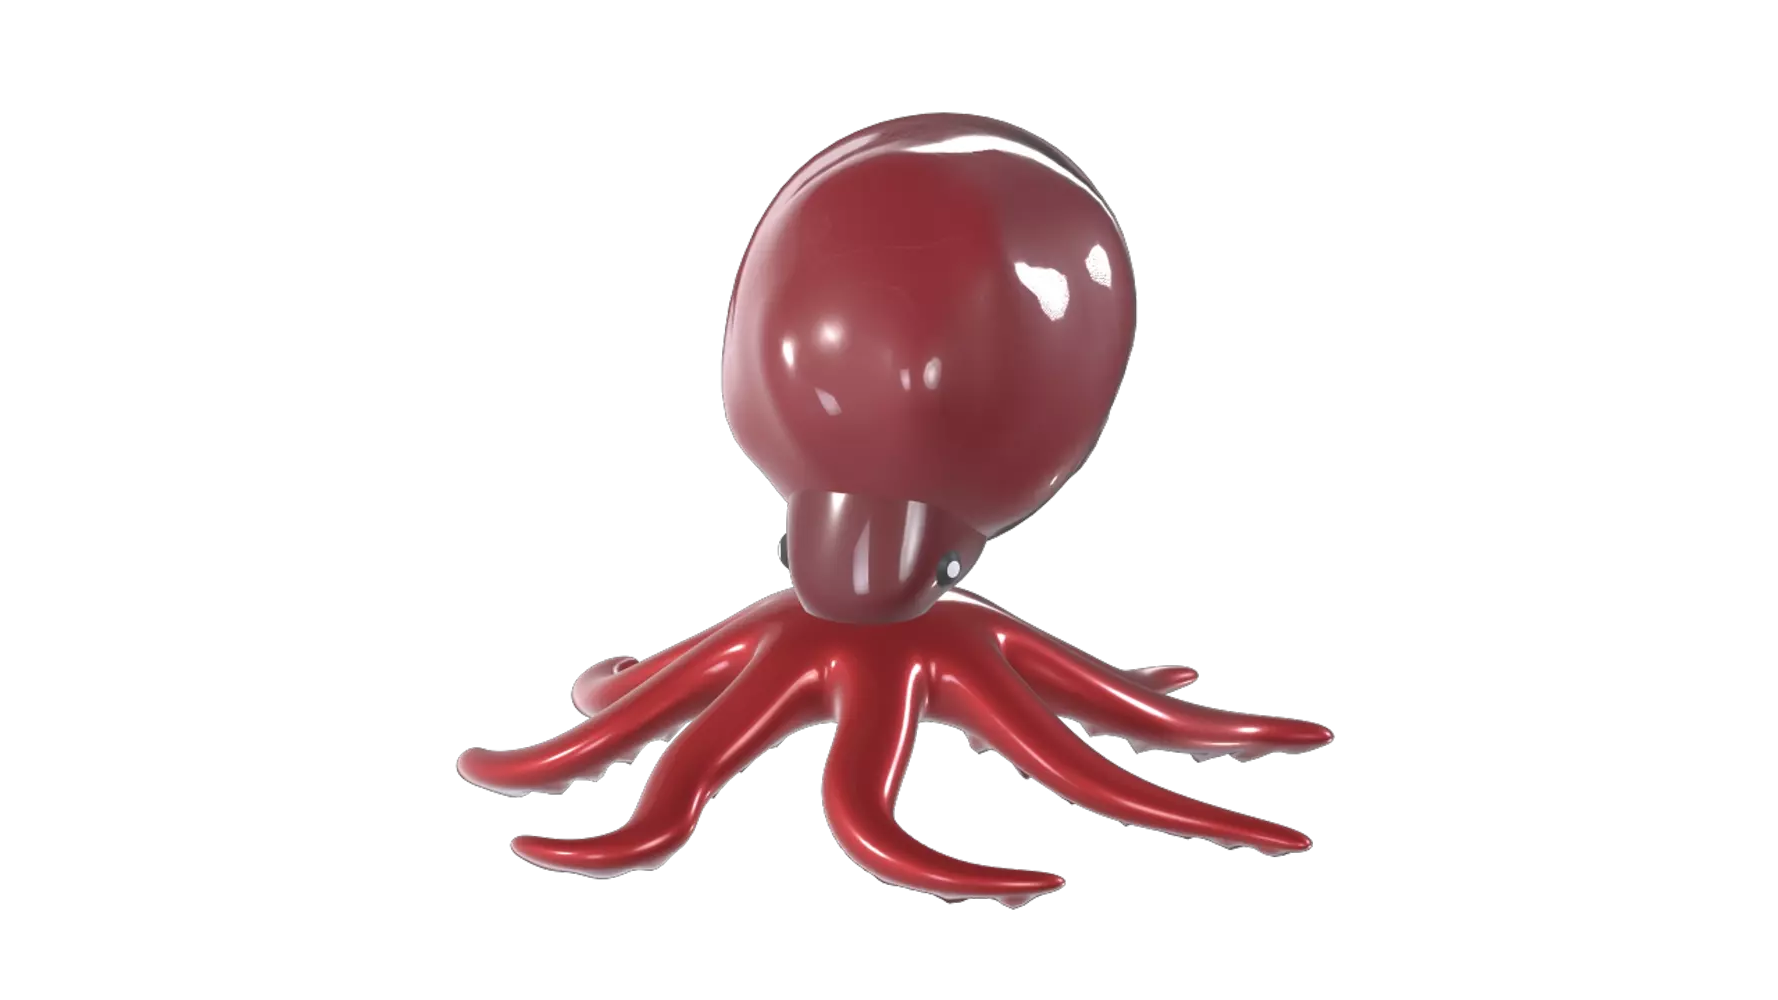 Octopus 3D Graphic